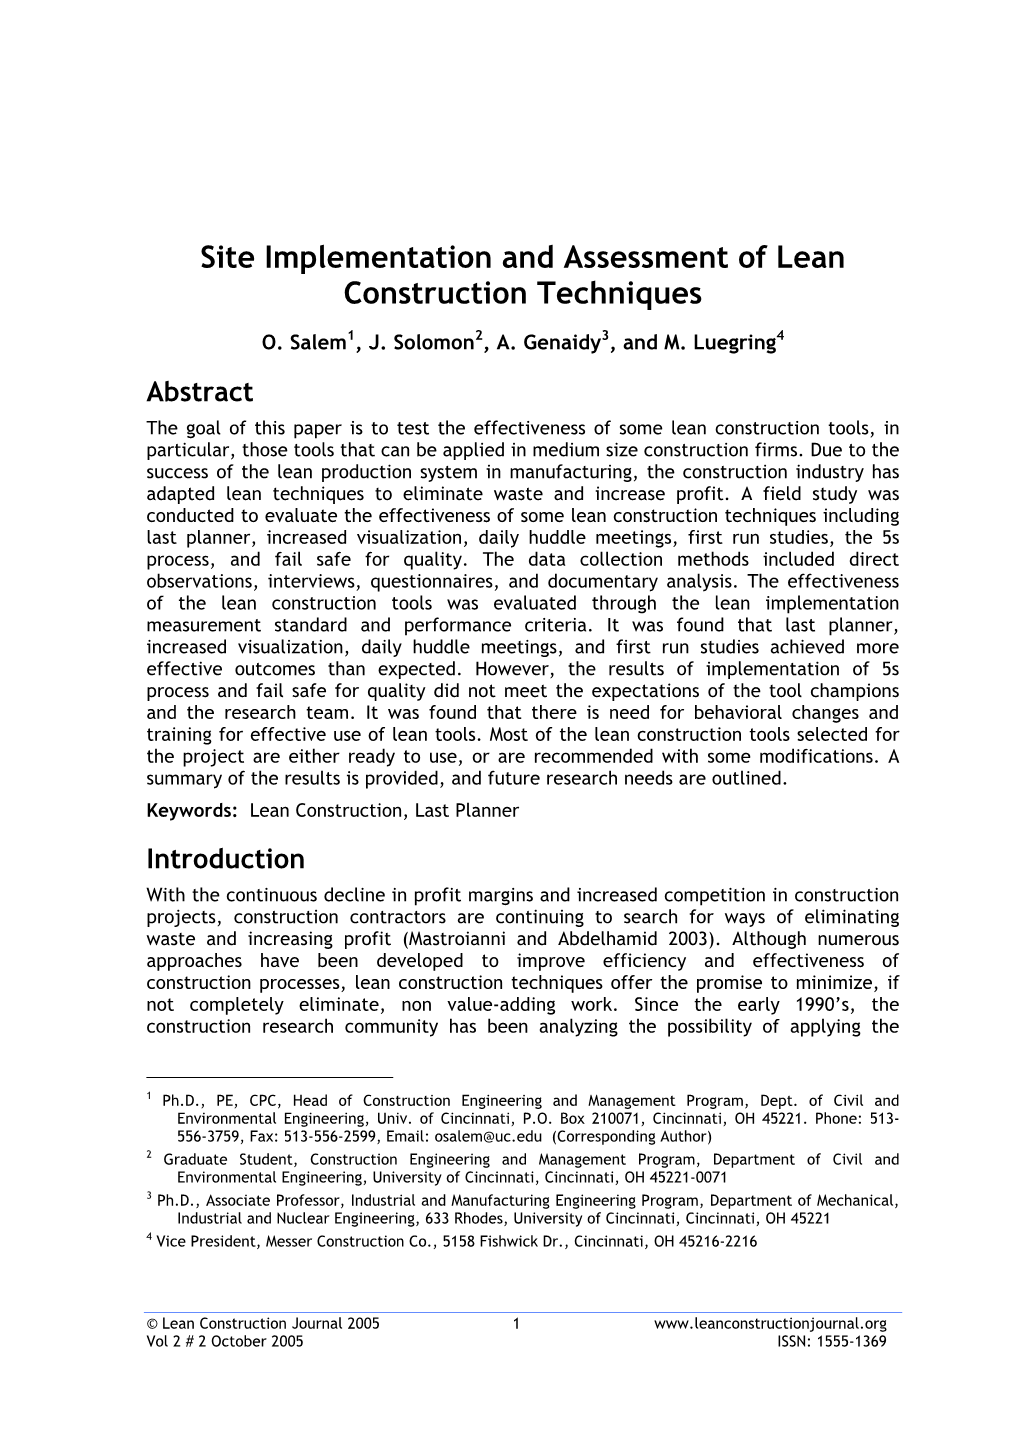 Site Implementation and Assessment of Lean Construction Techniques